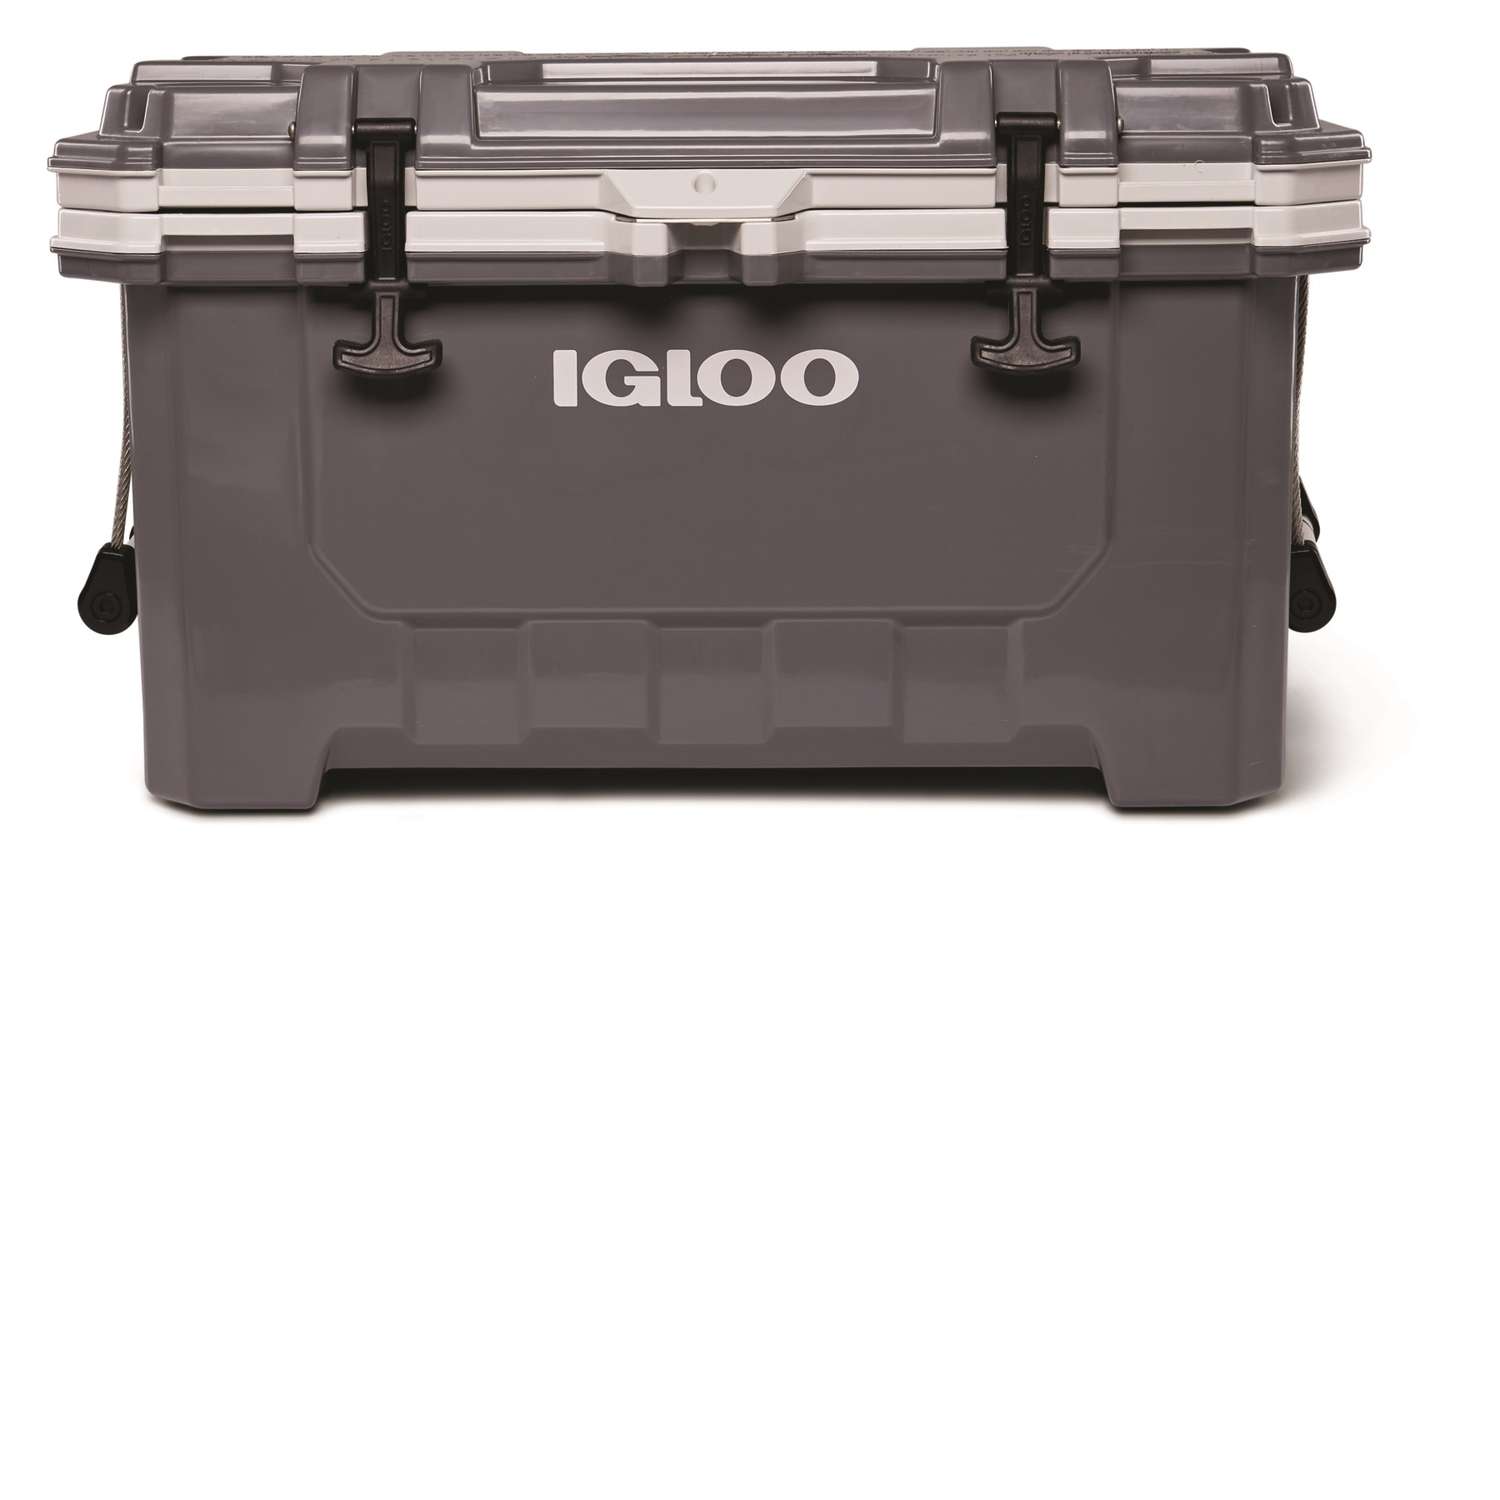 Igloo IMX Cooler 70 qt. Gray Ace Hardware